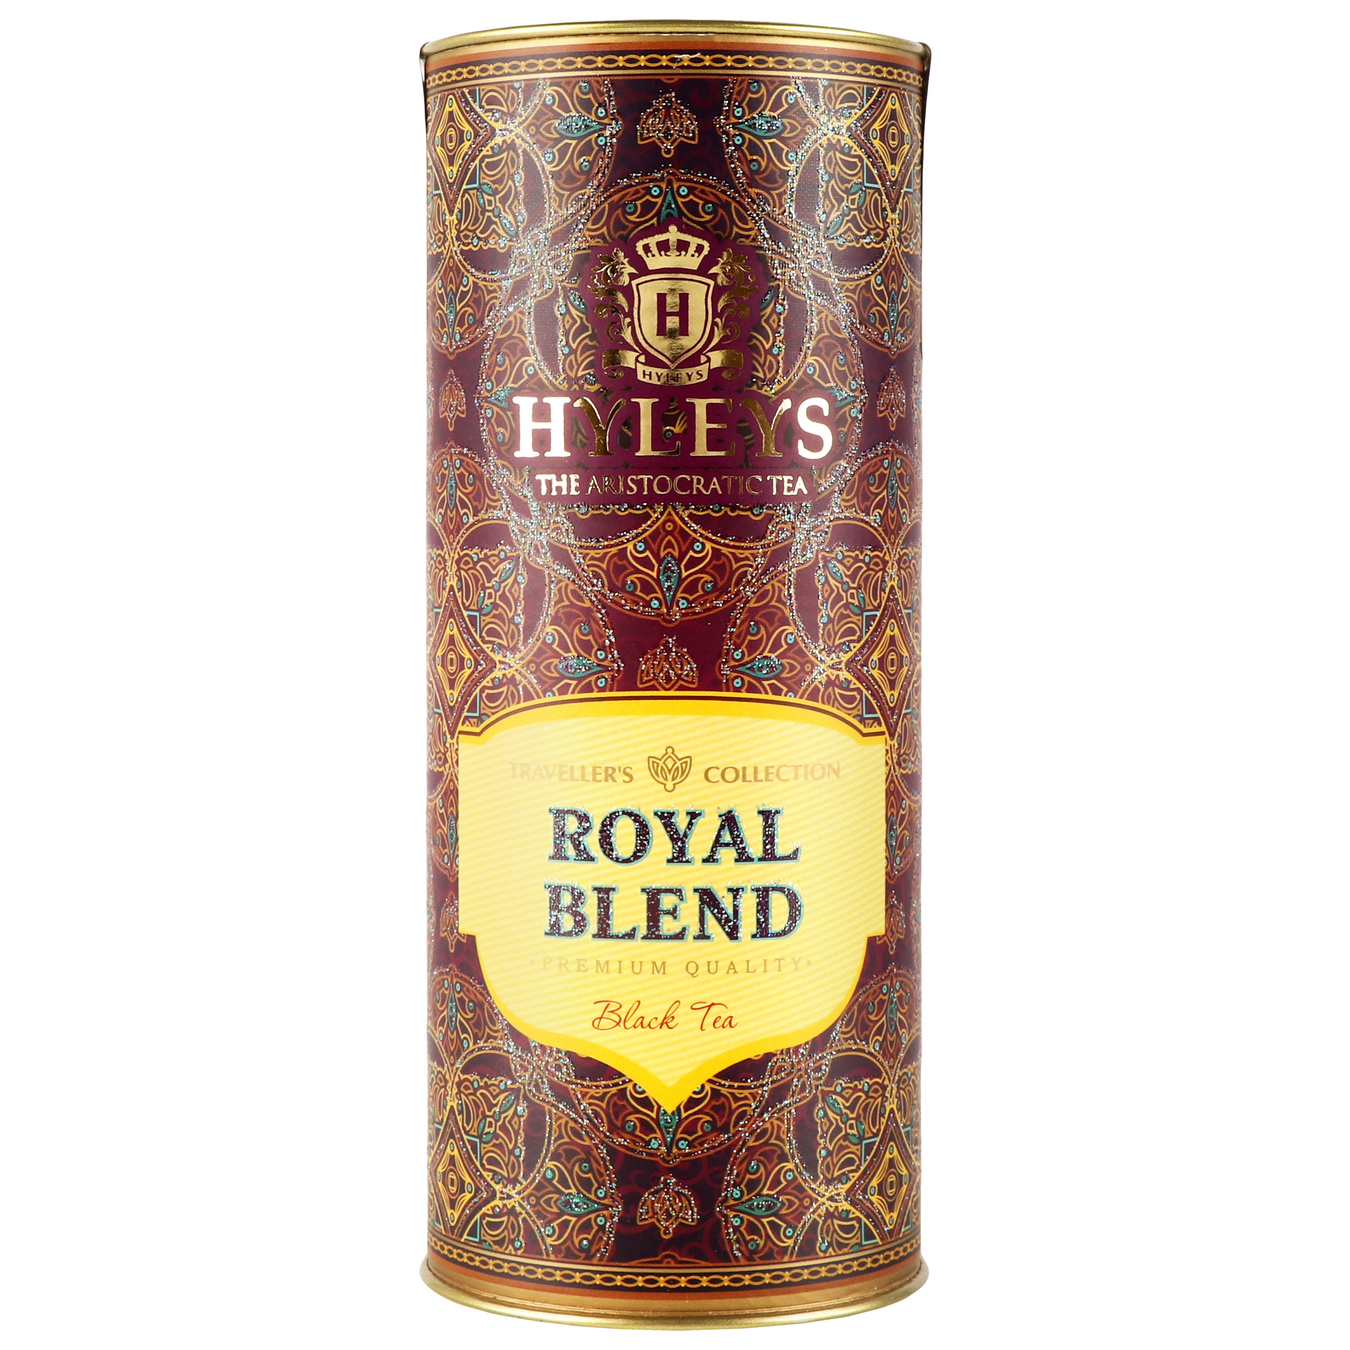 Black tea Hyleys Royal Blend tube 50g